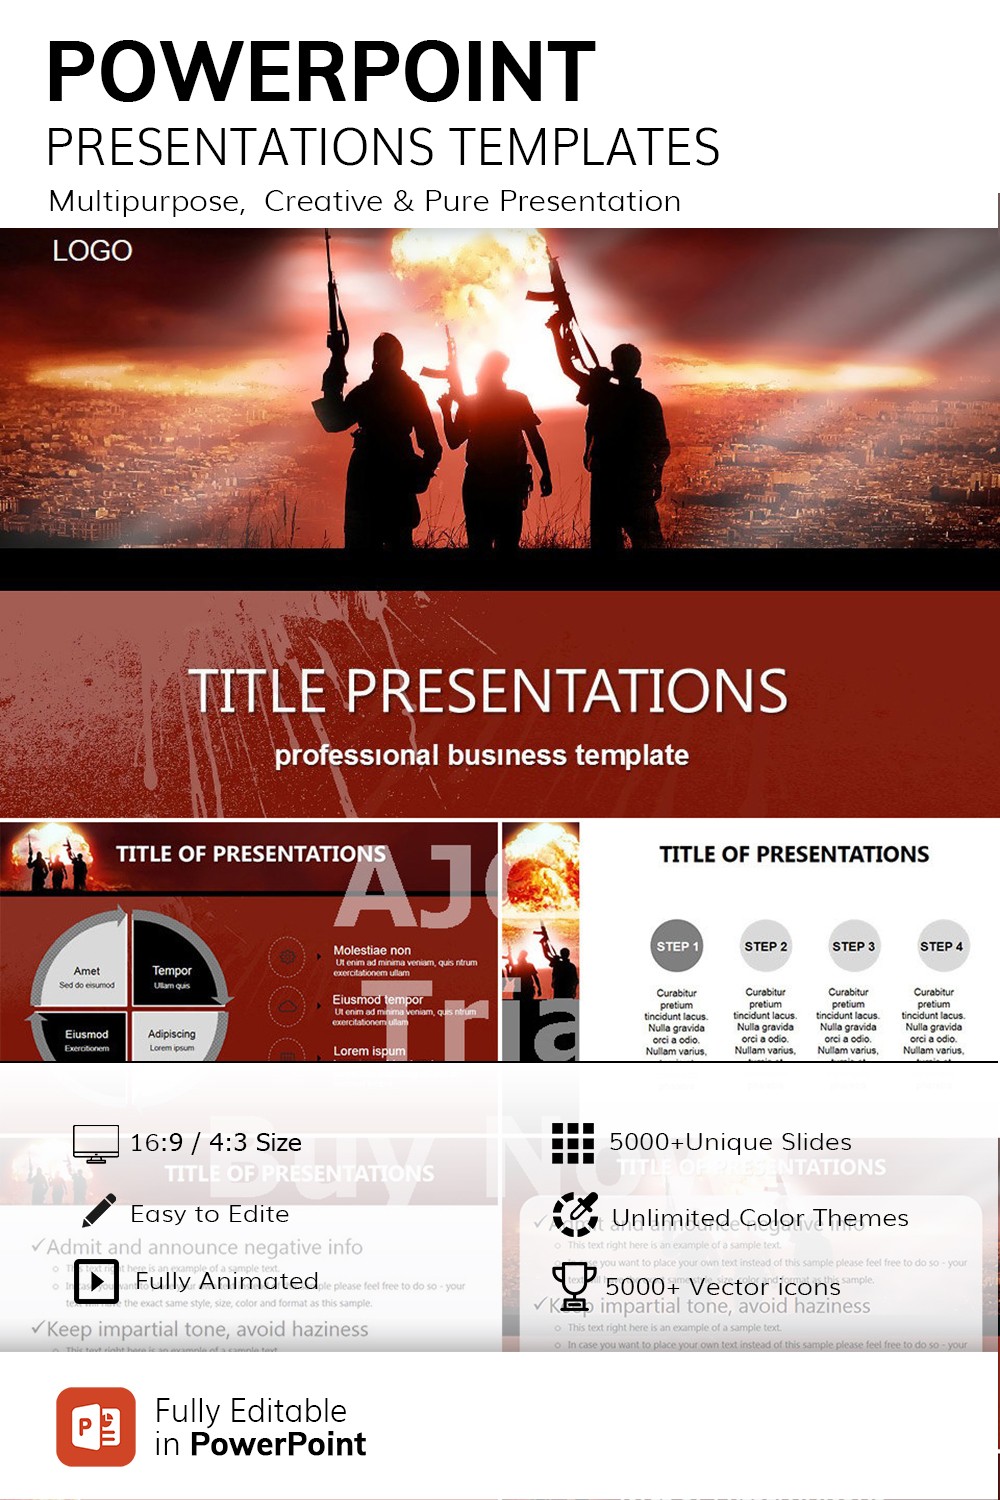 powerpoint presentation on terrorism